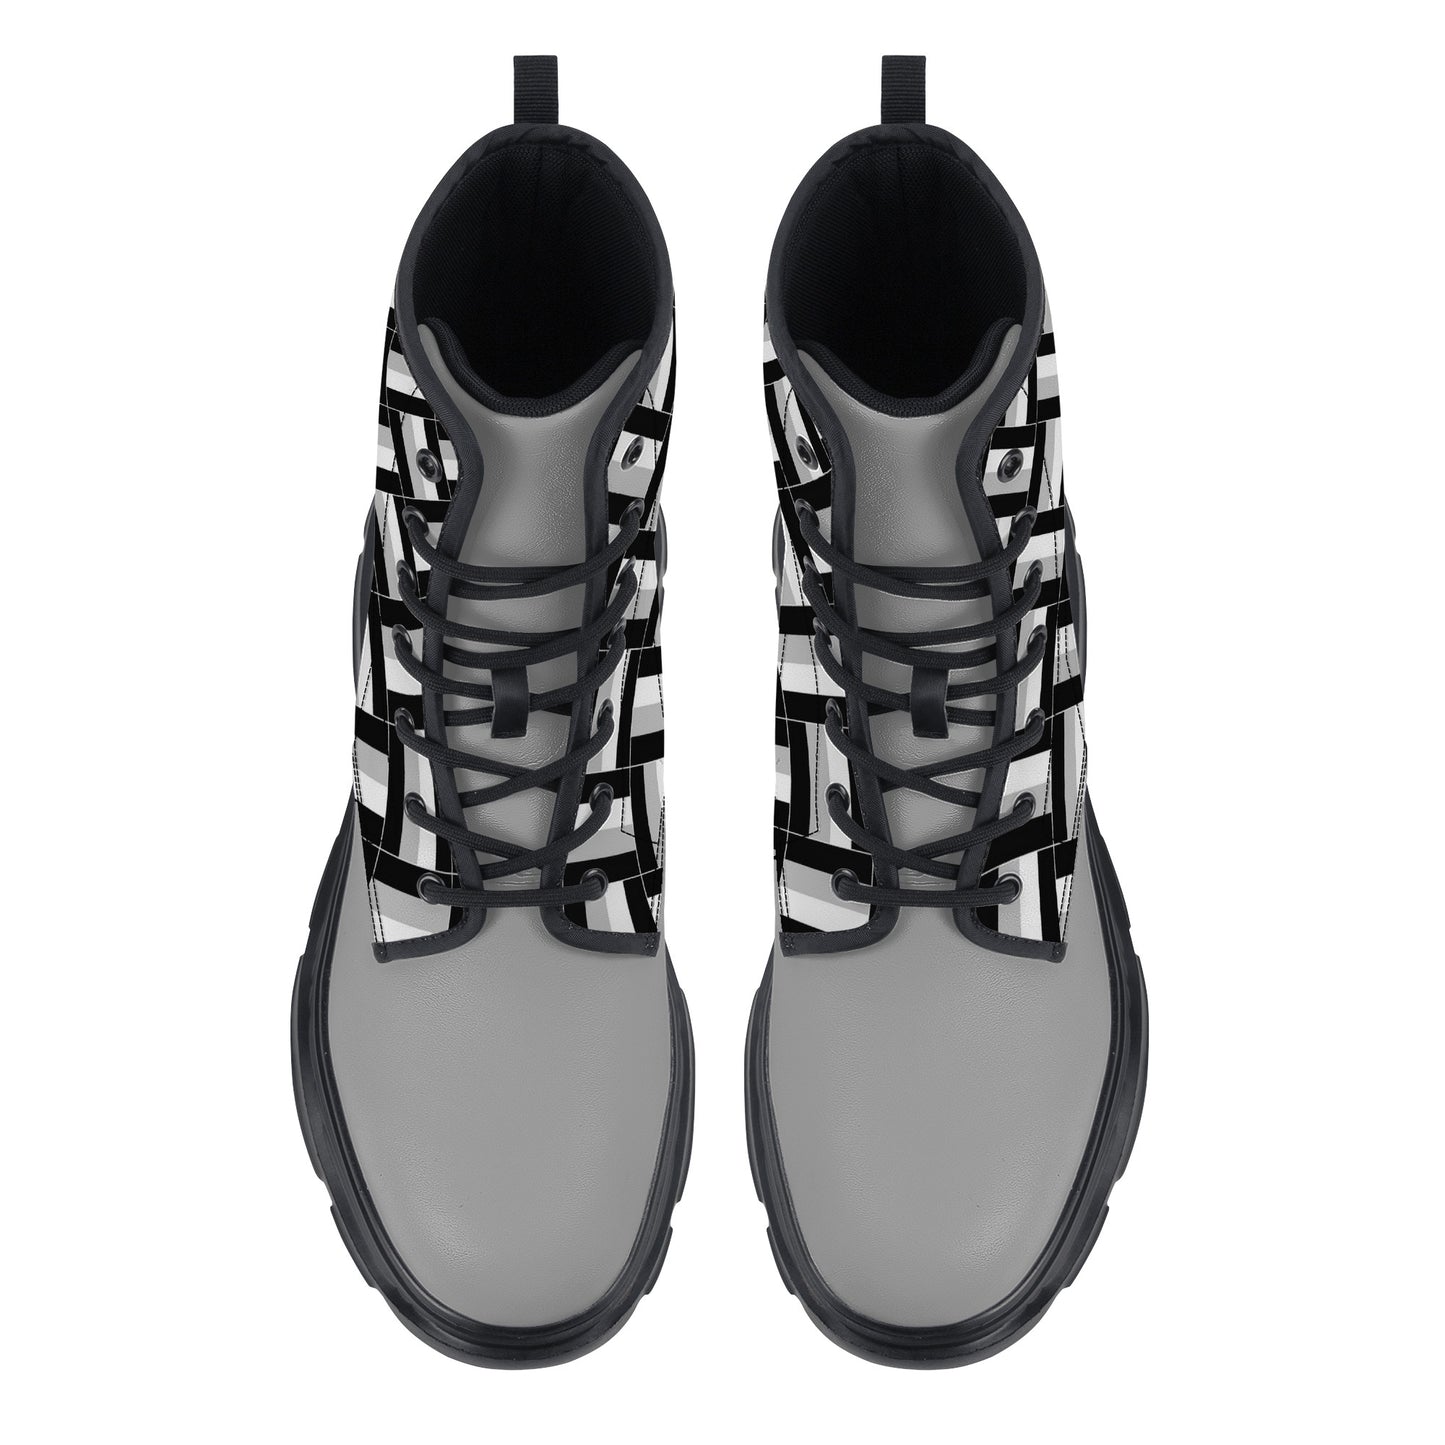 Unisex Chunky Boots - Black/Grey